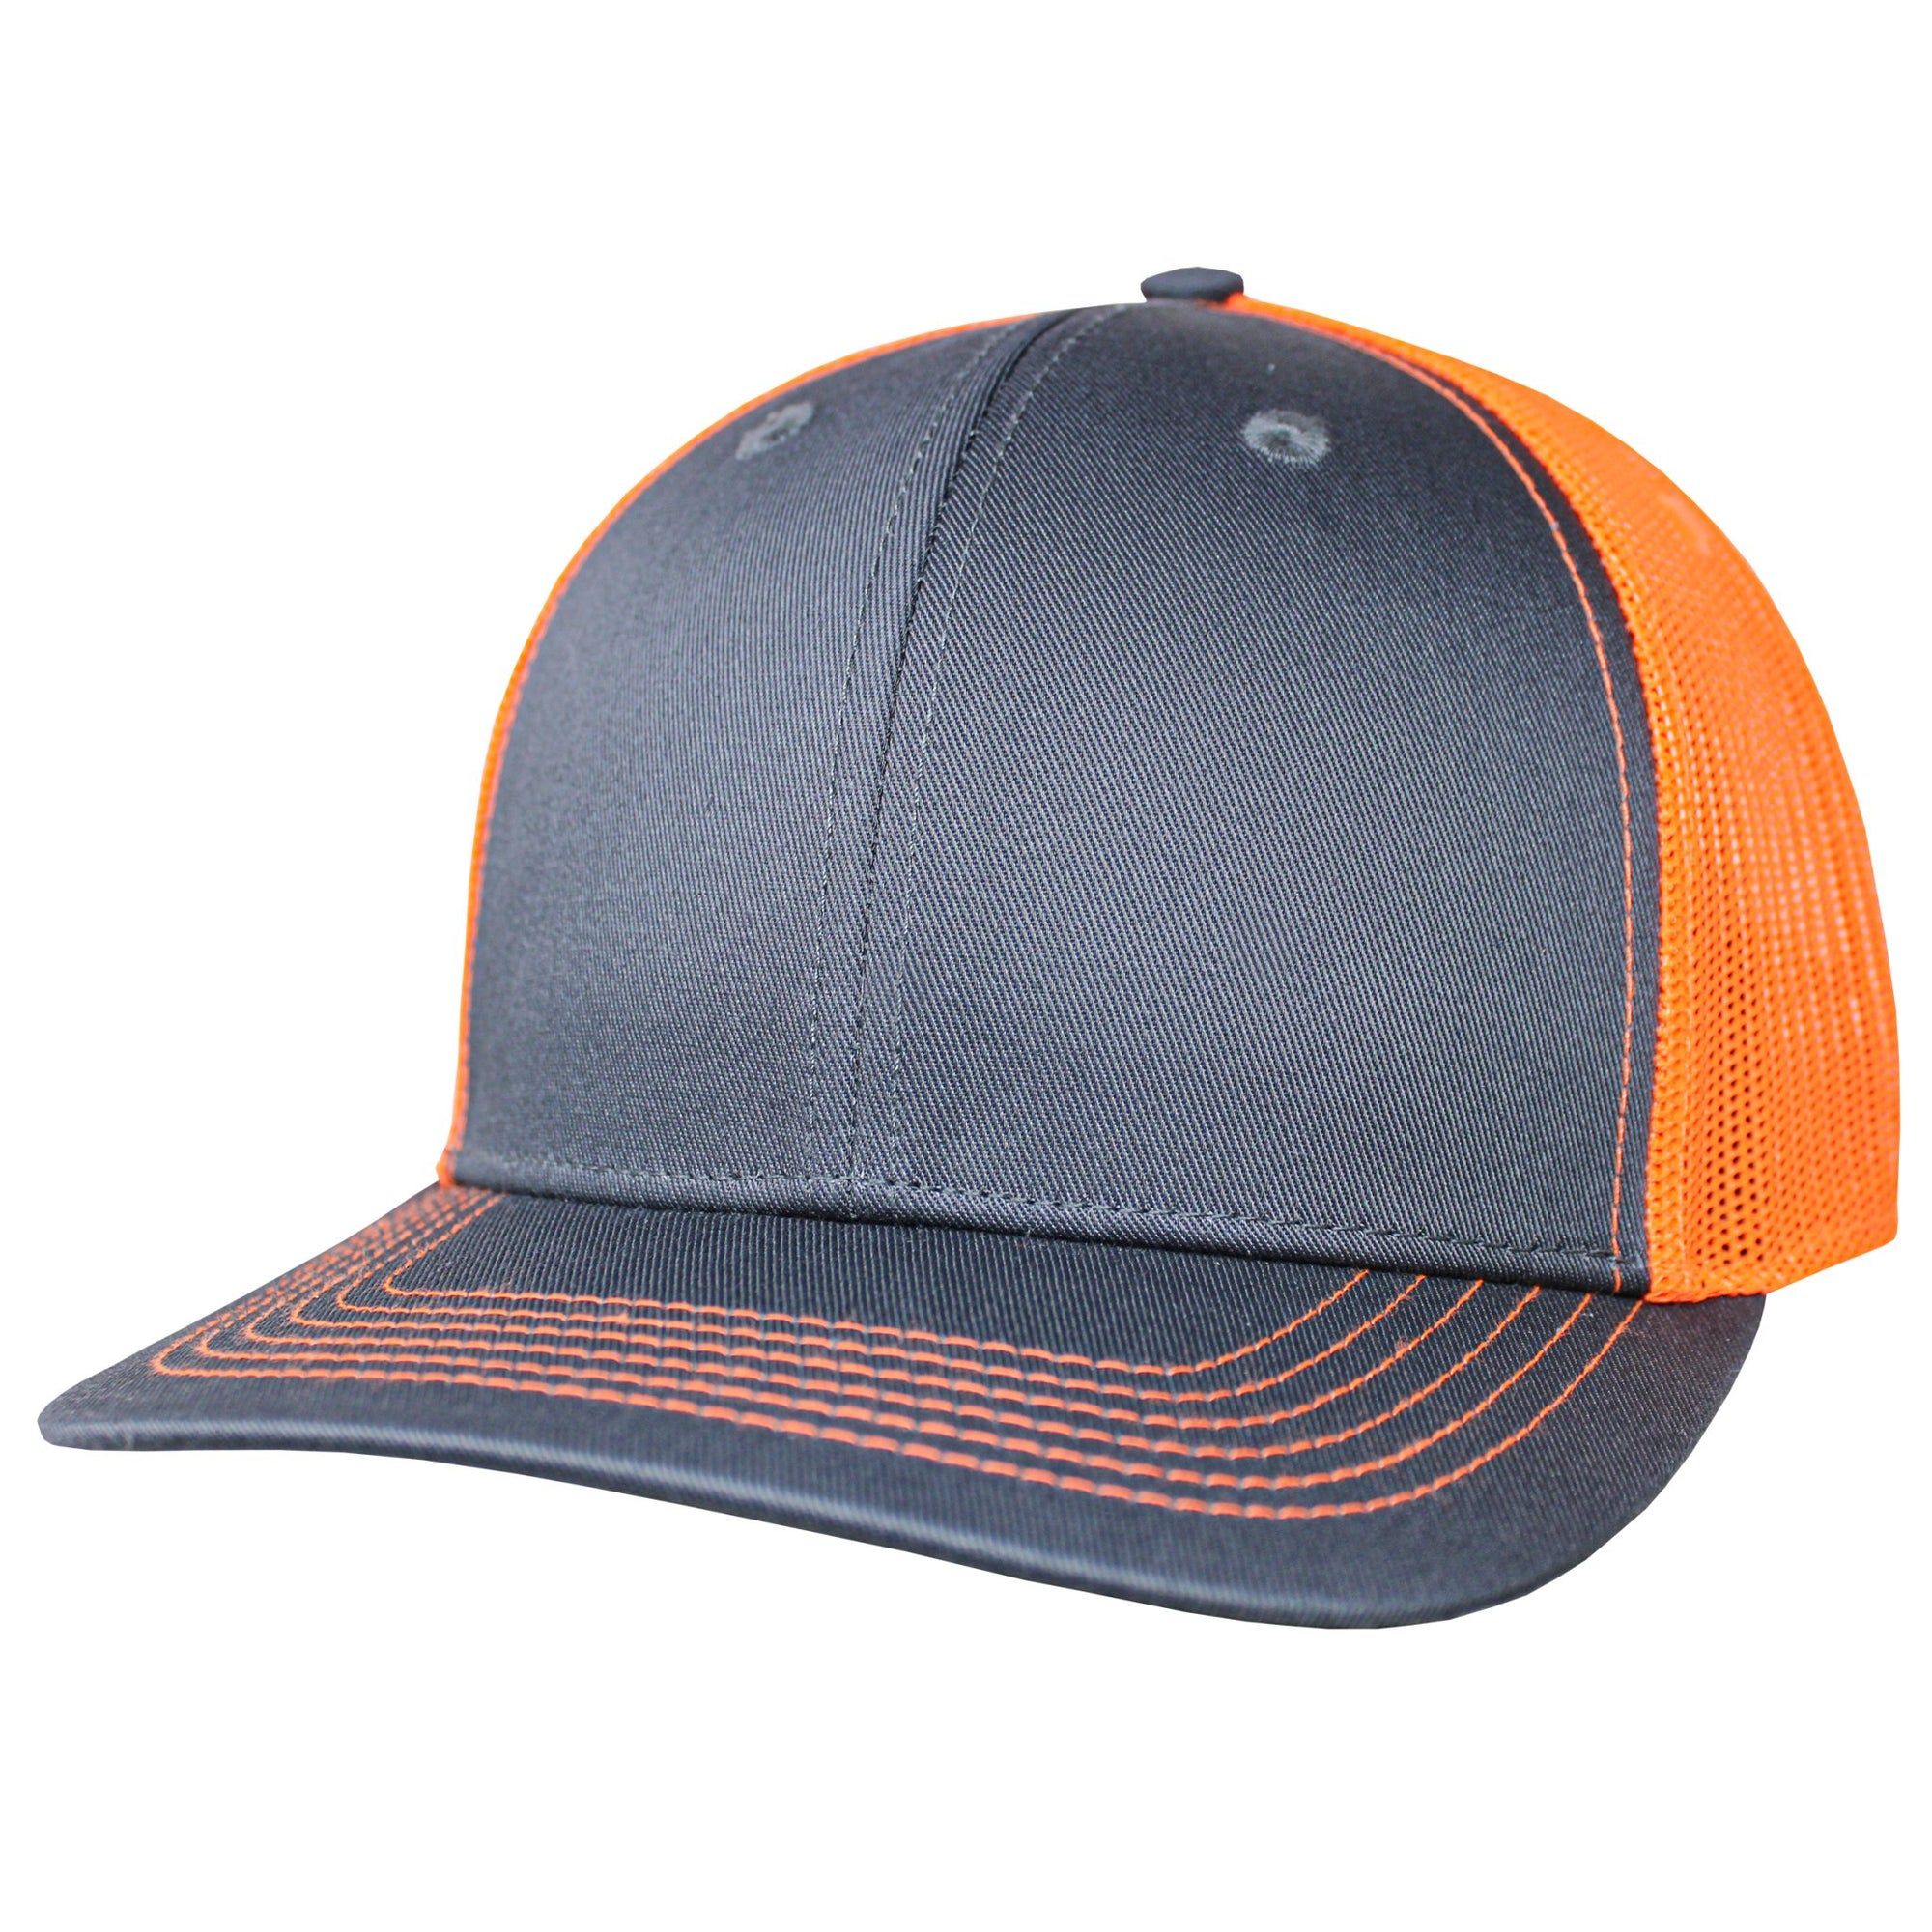 Blank Headwear - BC23 / 6 Panel Performance Trucker Cap - Dark Gray / Neon Orange - Black Cat MFG - Hat